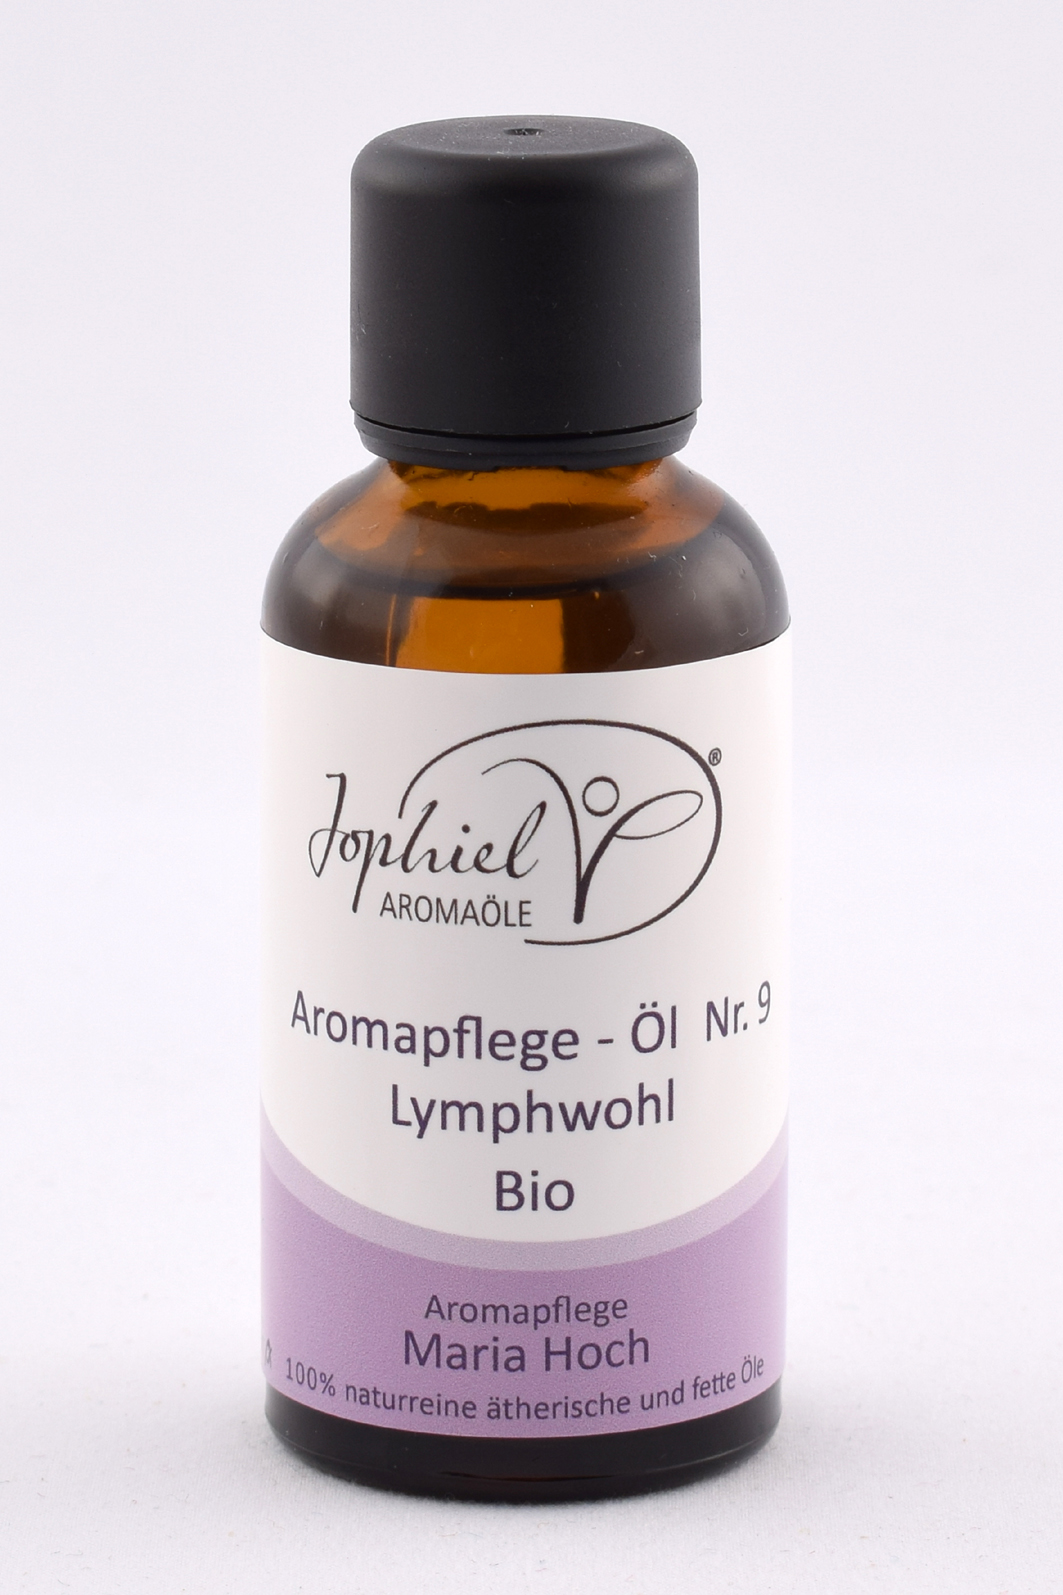 Aromapflege-Öl Nr. 09 Lymphwohl Bio 50 ml